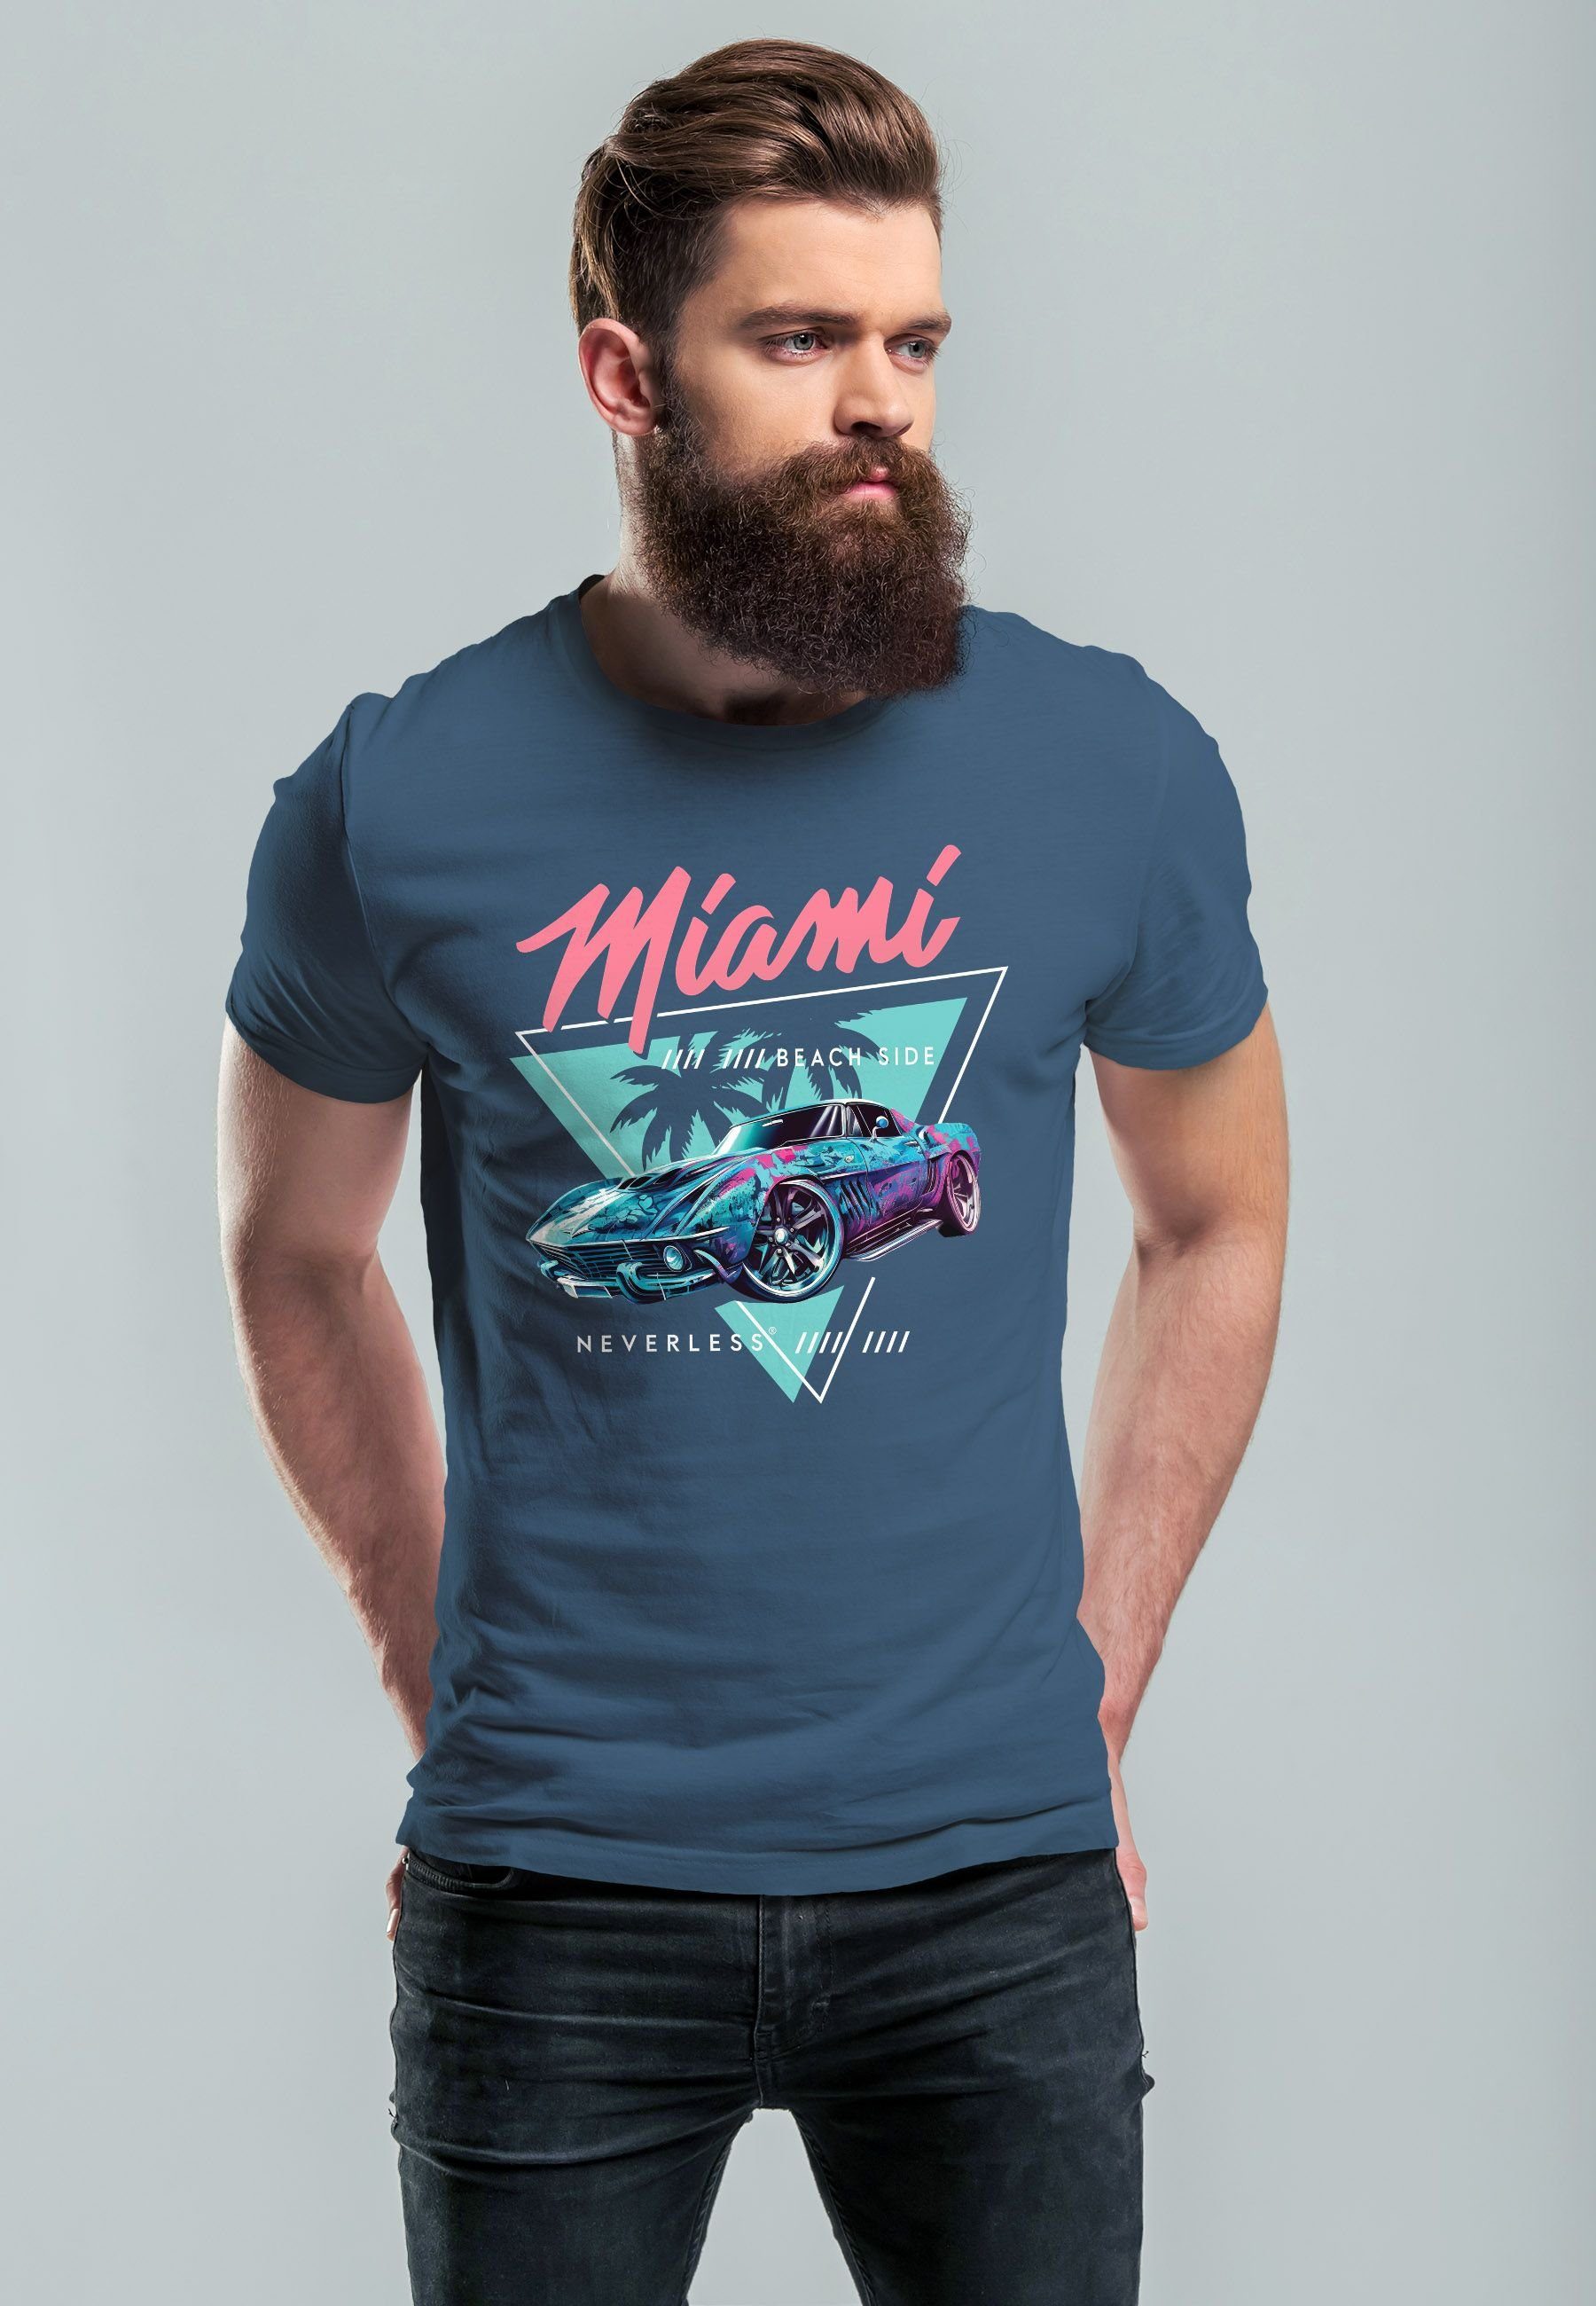 USA Herren T-Shirt Print-Shirt mit Print denim Bedruckt Surfing blue Automobil Beach Motiv Miami Retro Neverless